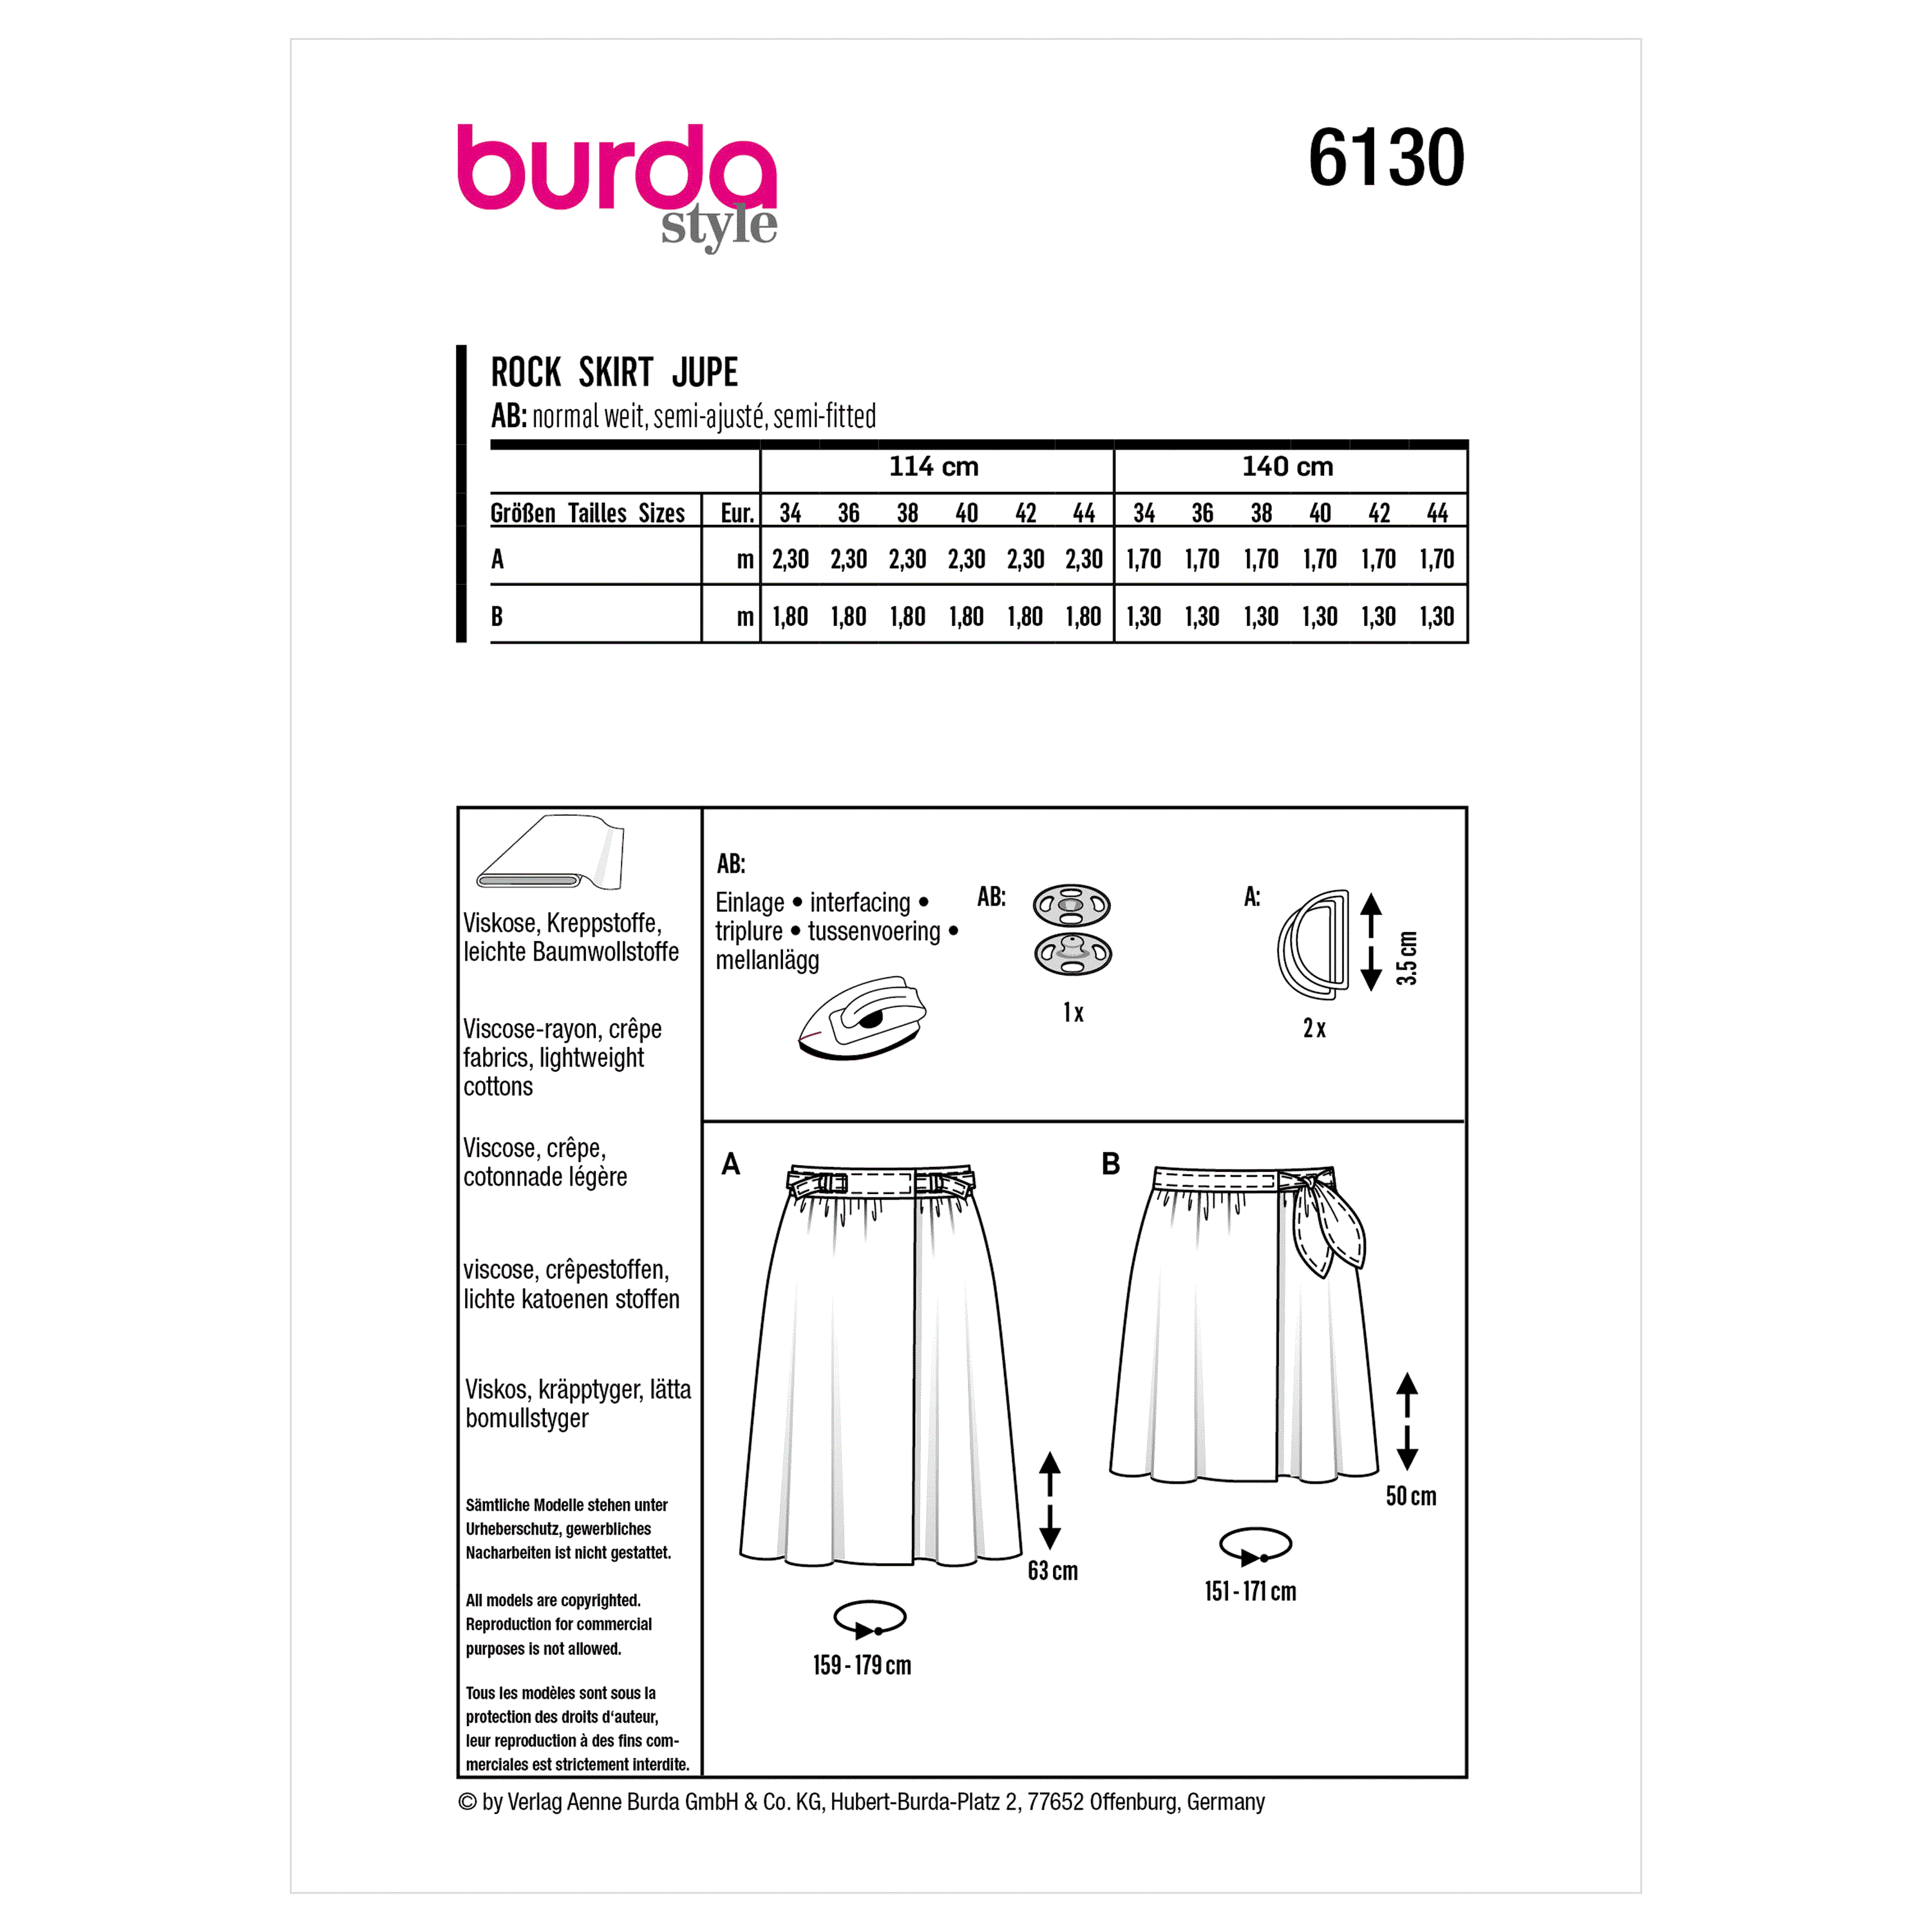 Burda Sewing Pattern 6130 Skirt from Jaycotts Sewing Supplies